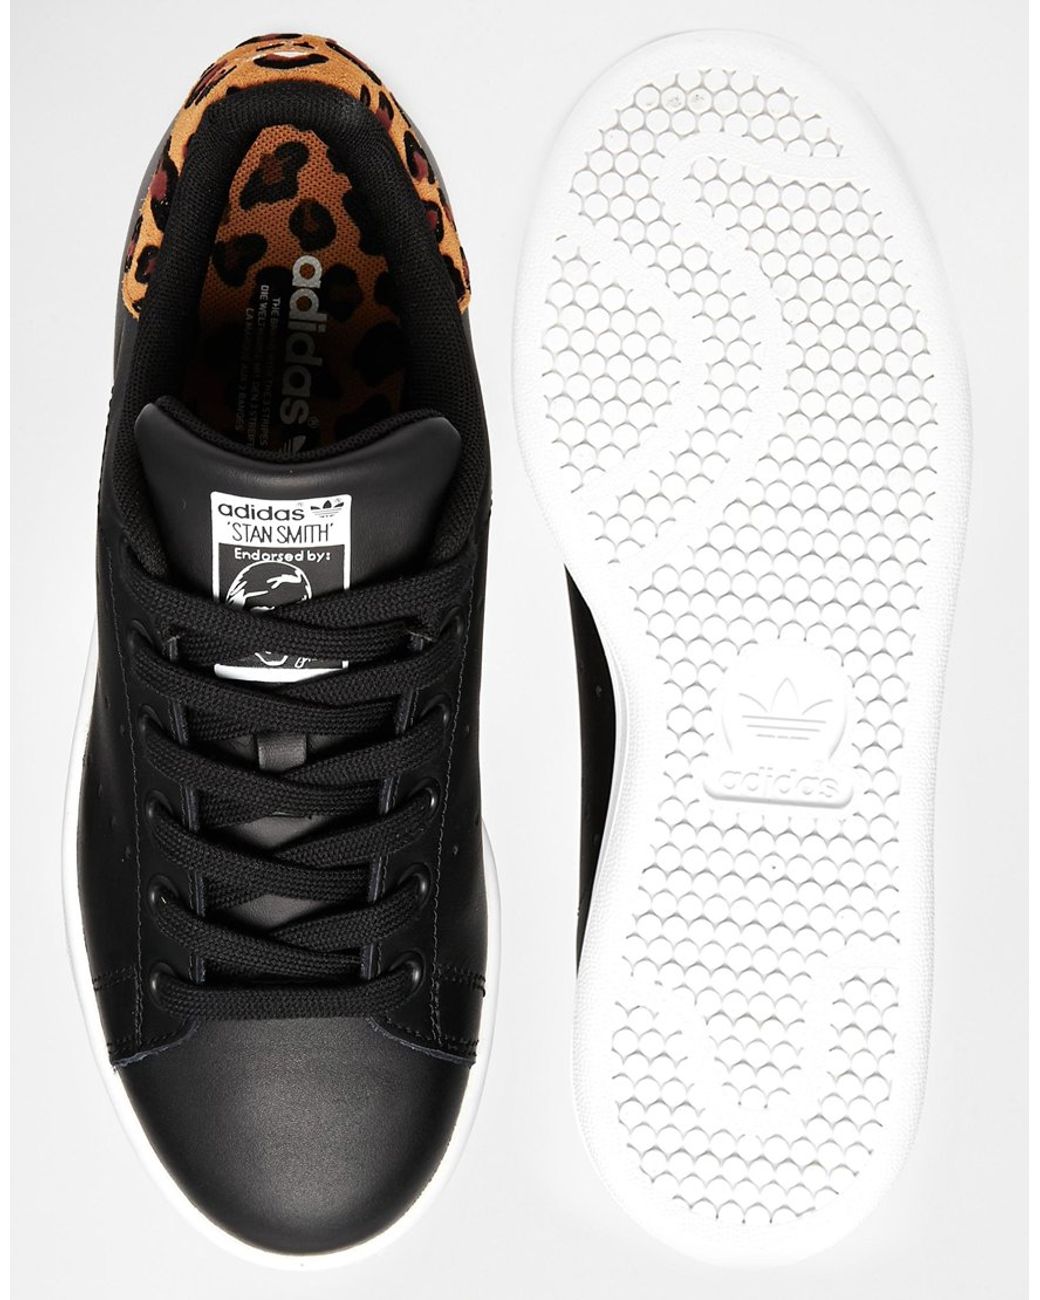 adidas Originals Stan Smith Black Animal Print Sneakers | Lyst